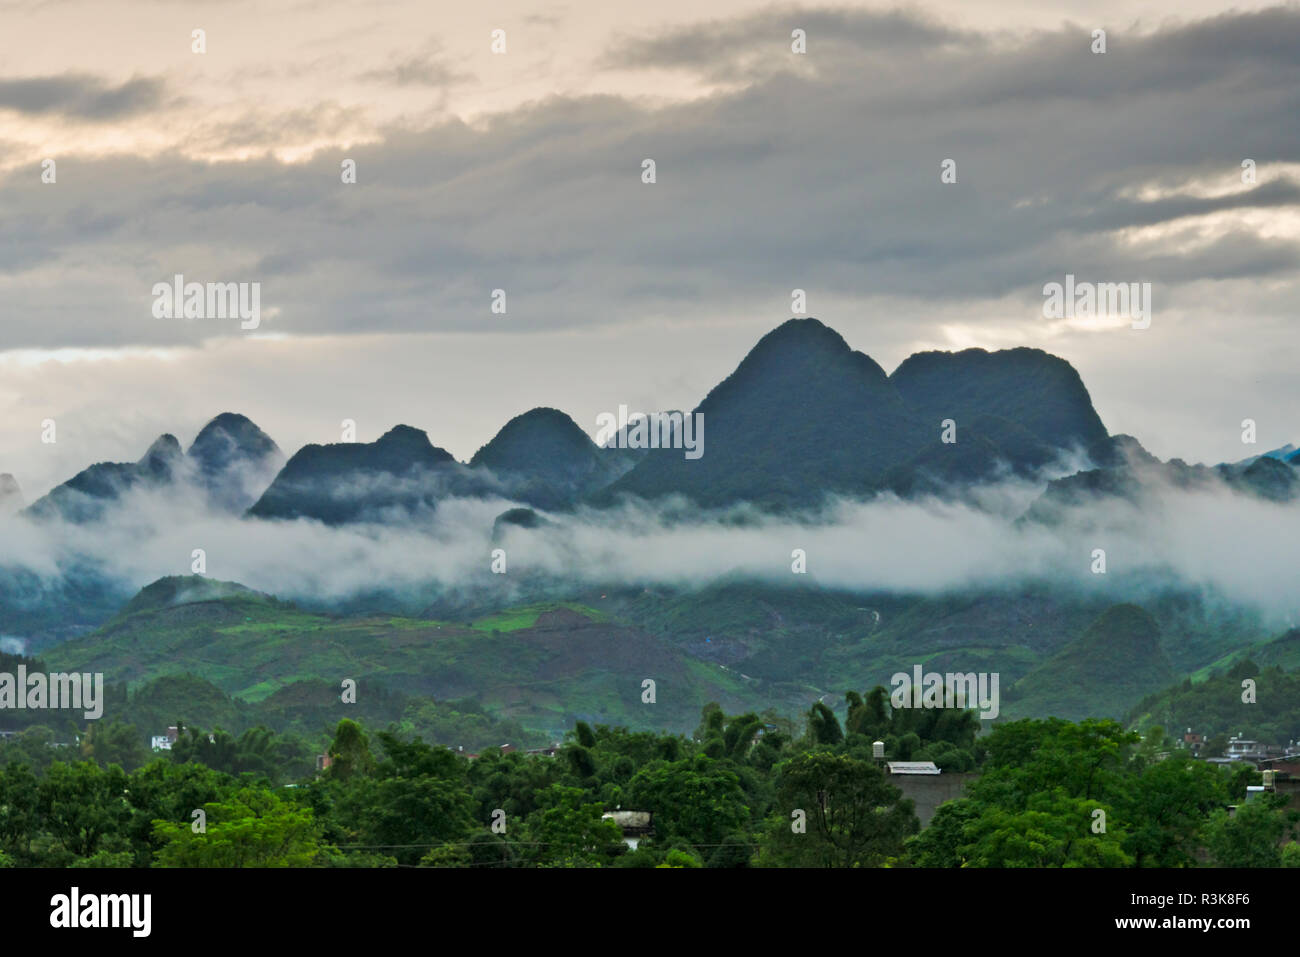 Limestone hills in mist, Xingping, Yangshuo, China Stock Photo